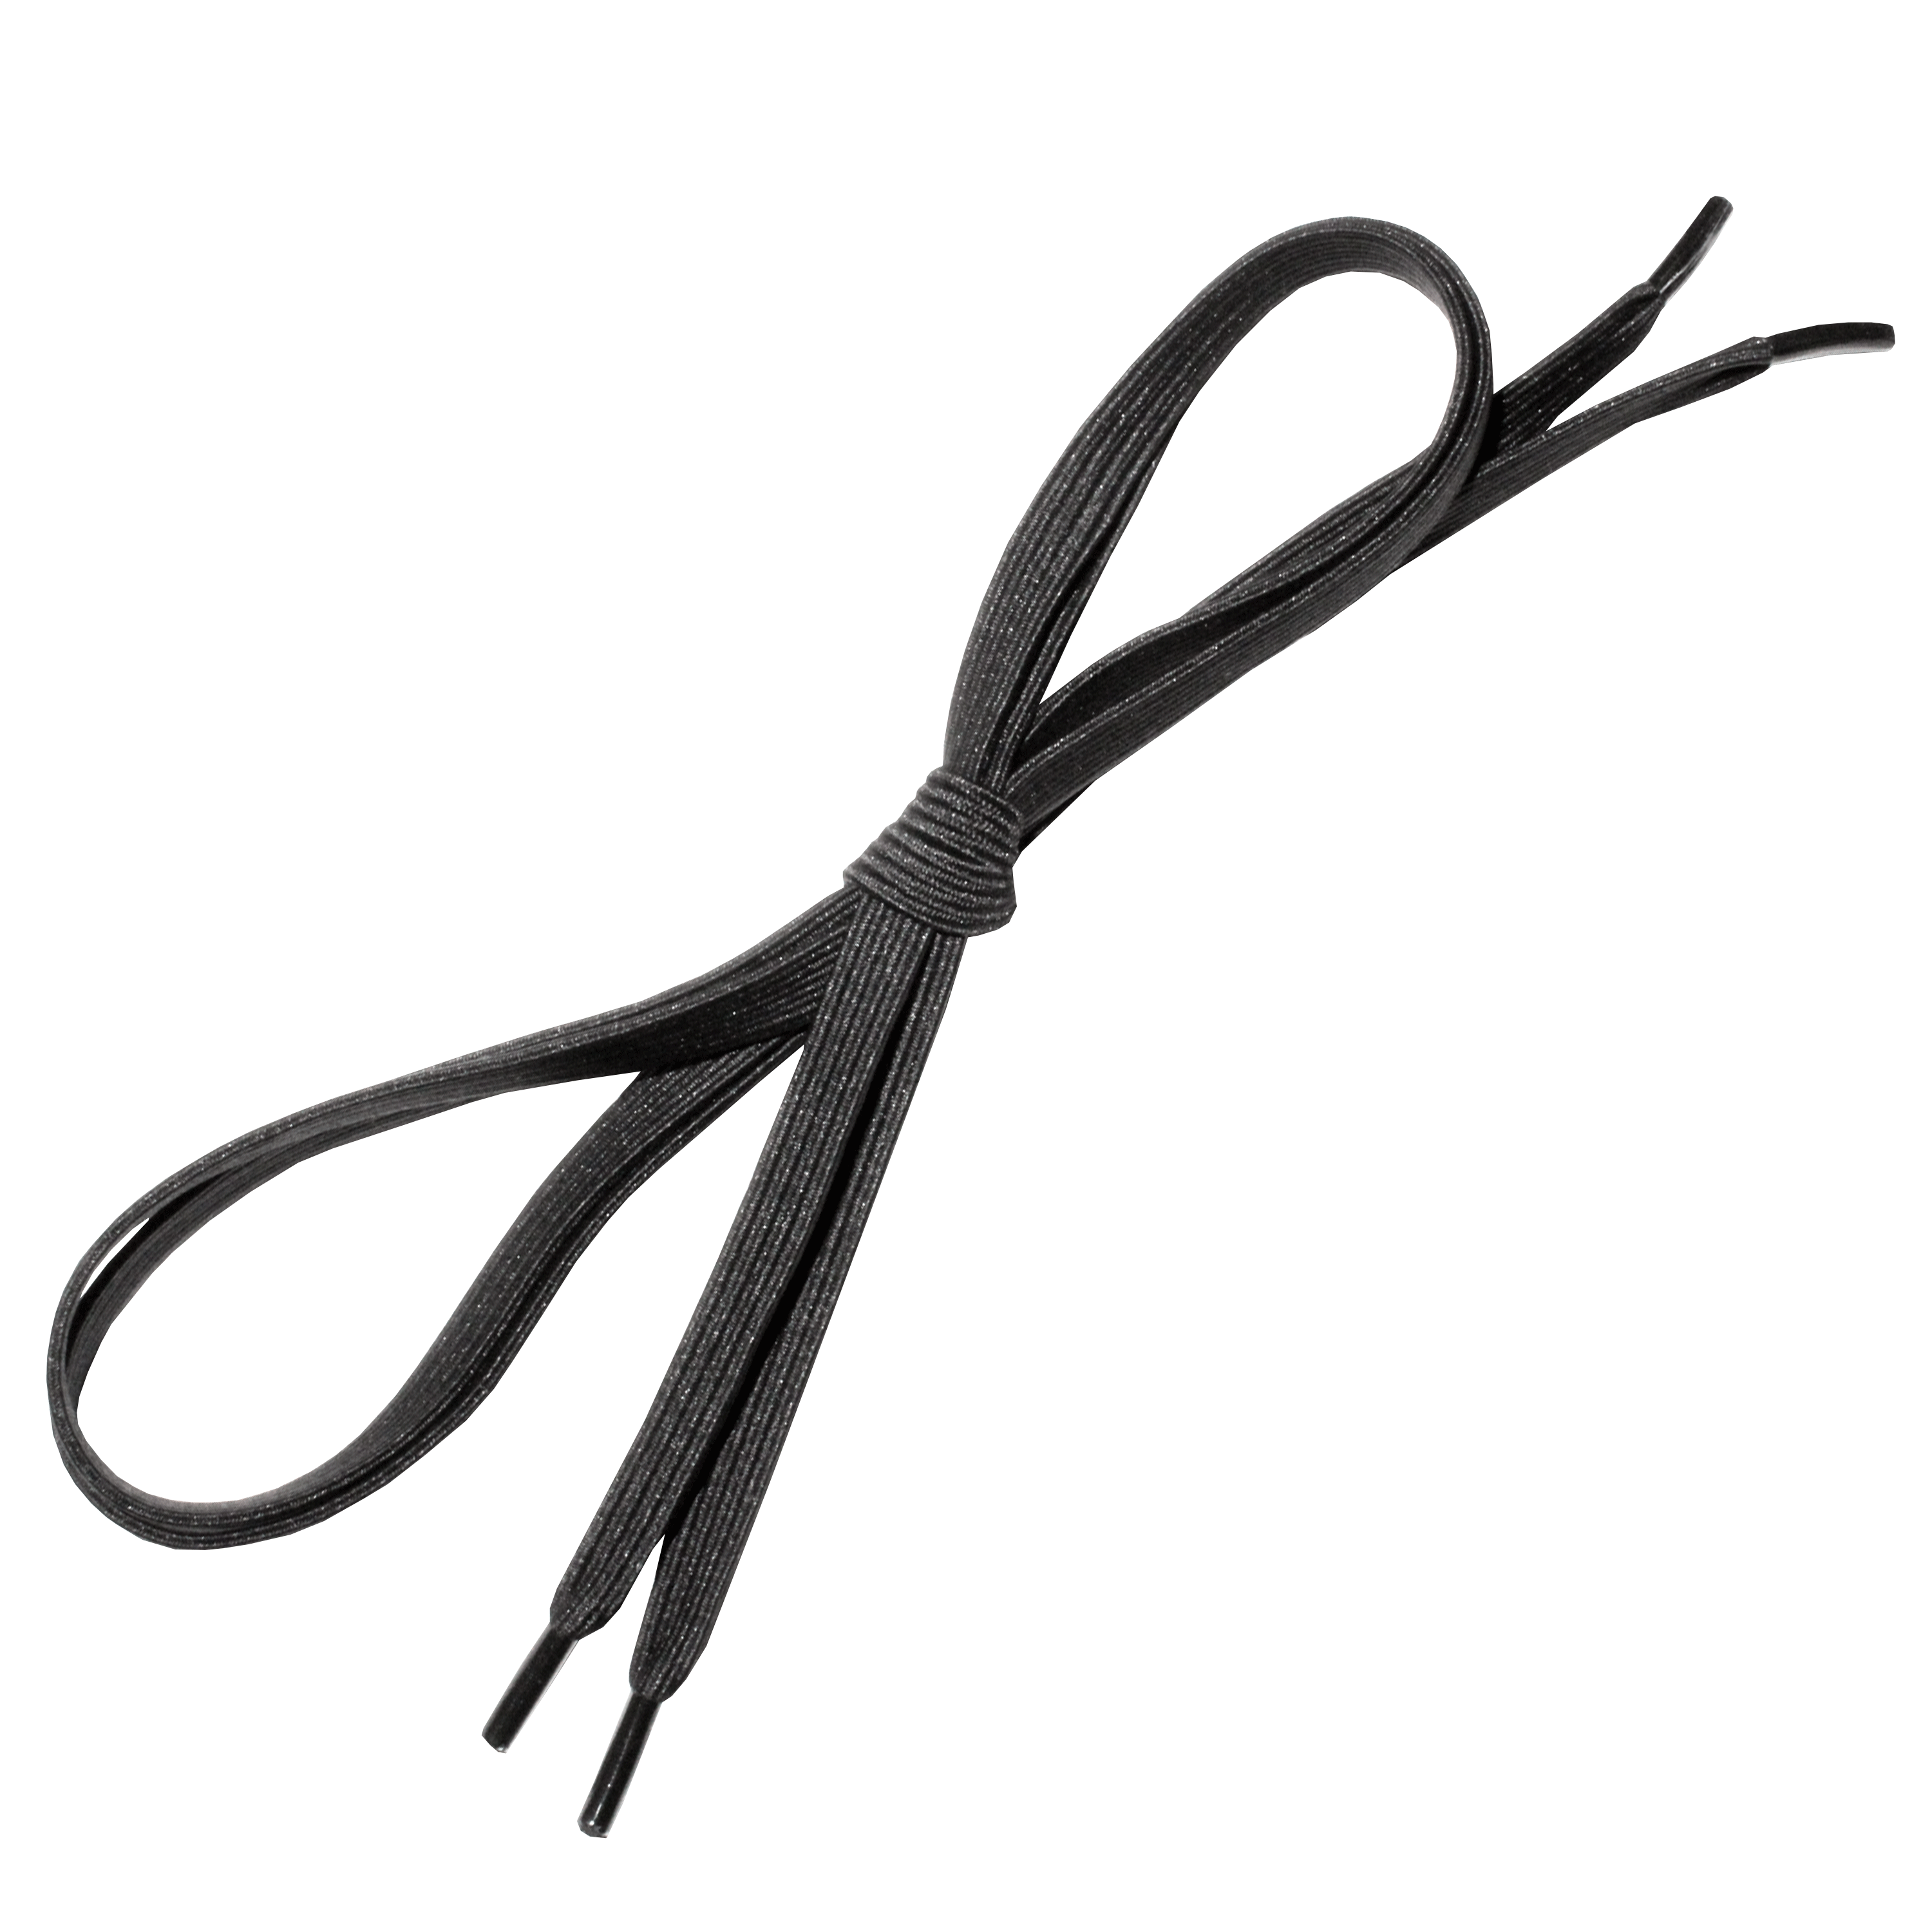 Laces Lock Bracks Shoelace clips, a pair Black / Black Keep Your